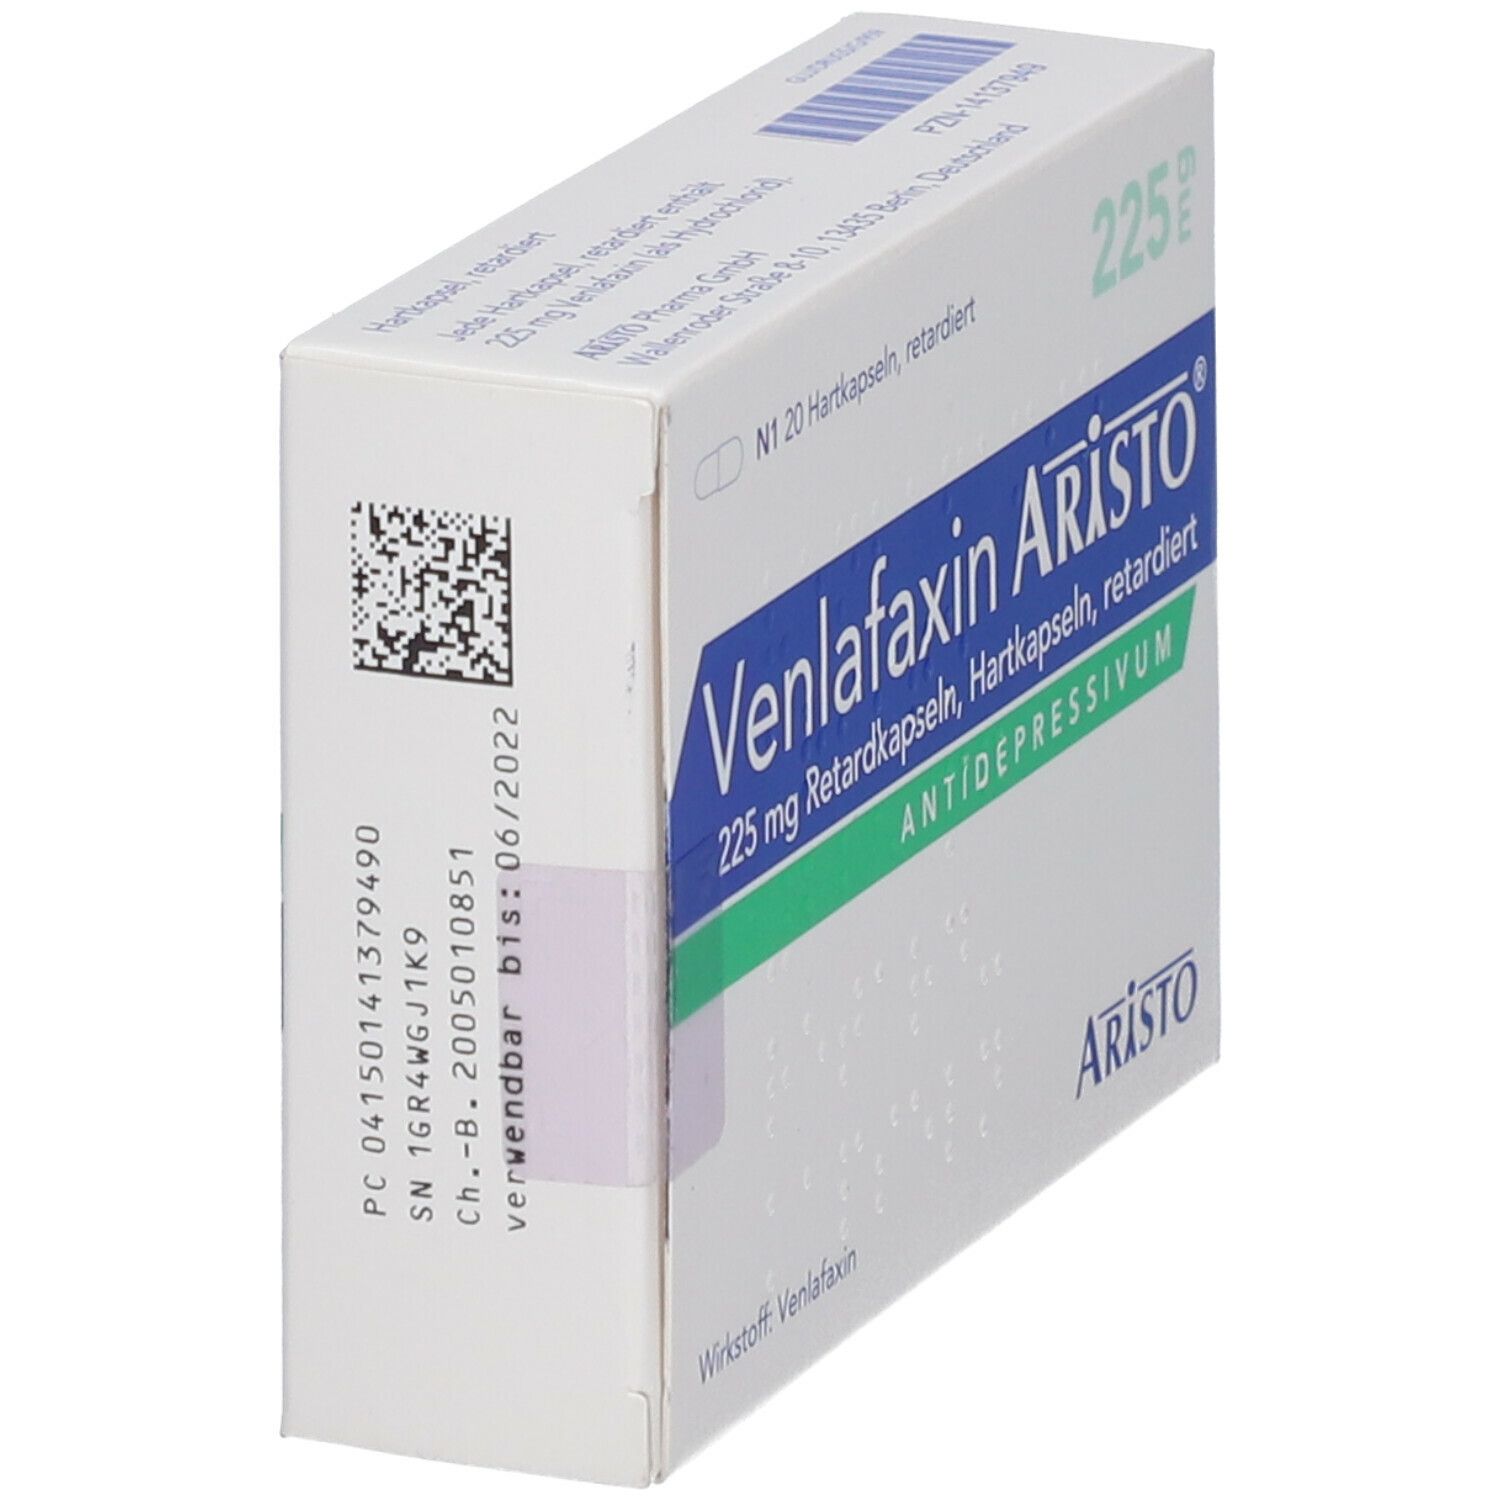 Venlafaxin Aristo® 225 mg